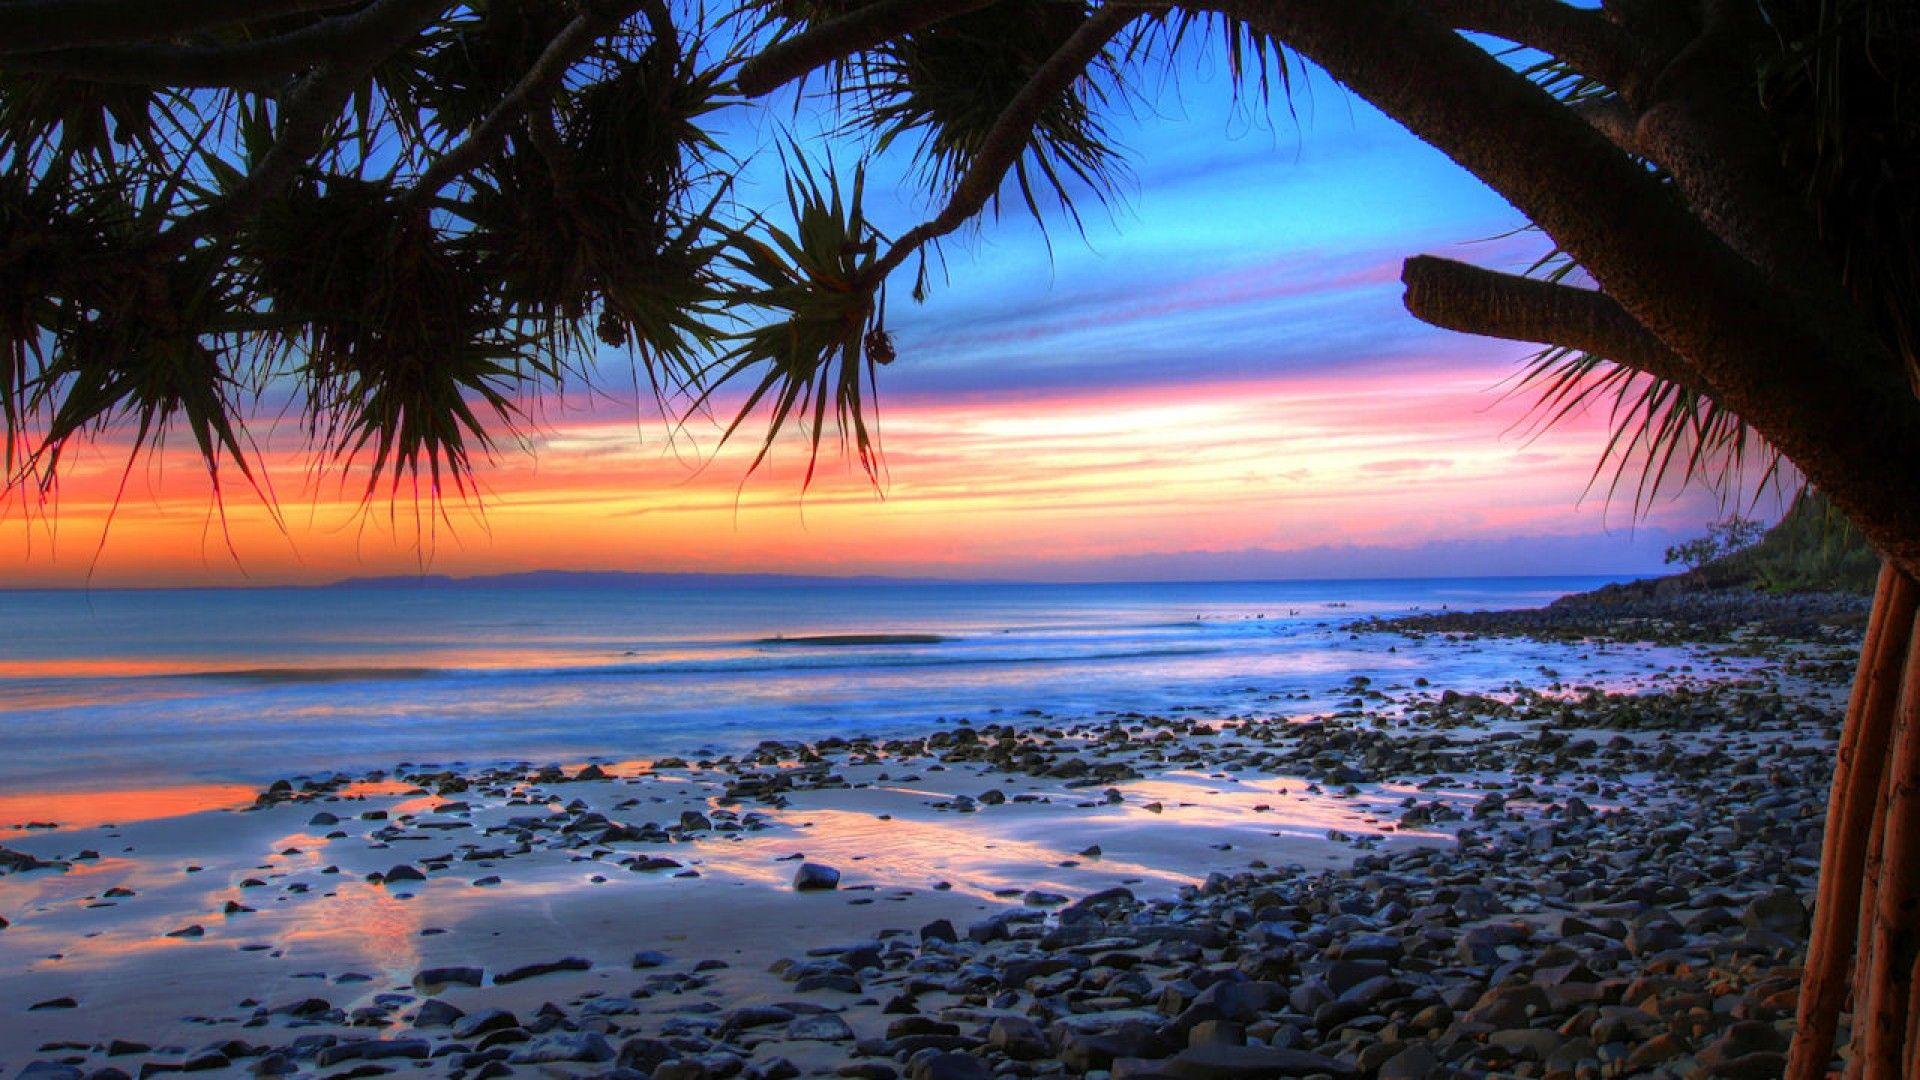 HD Sunset On Beach In Noosa Np Australia Wallpaper. SUNRISE AND